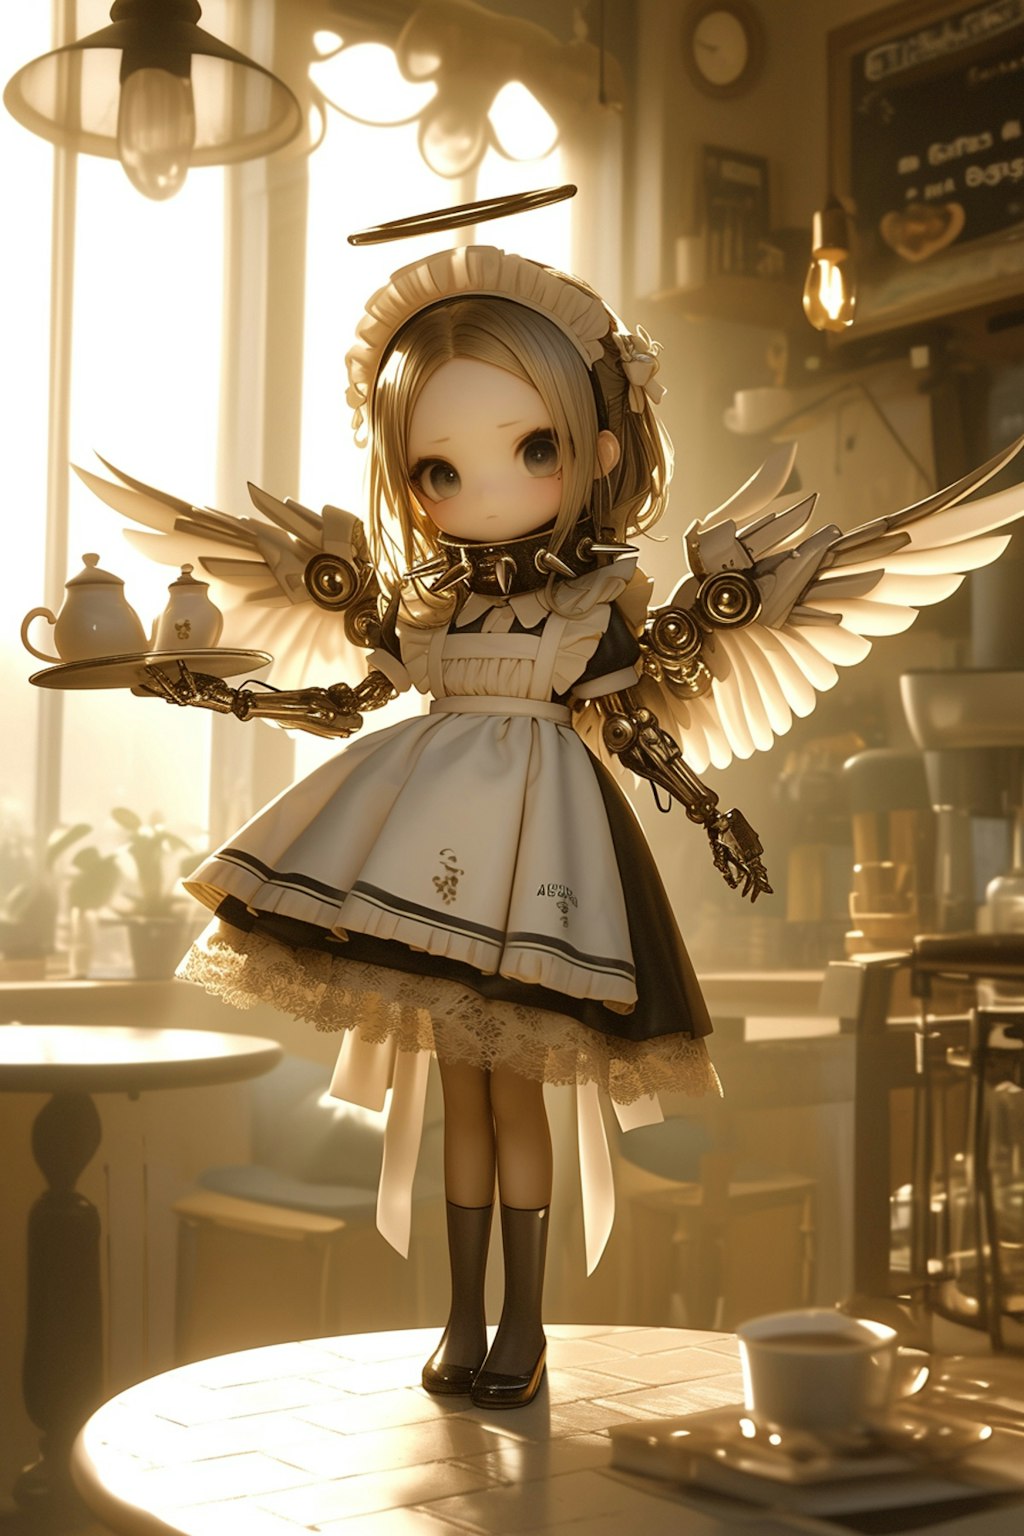 Mech/Maid/Angel/Cafe/Chibi #1